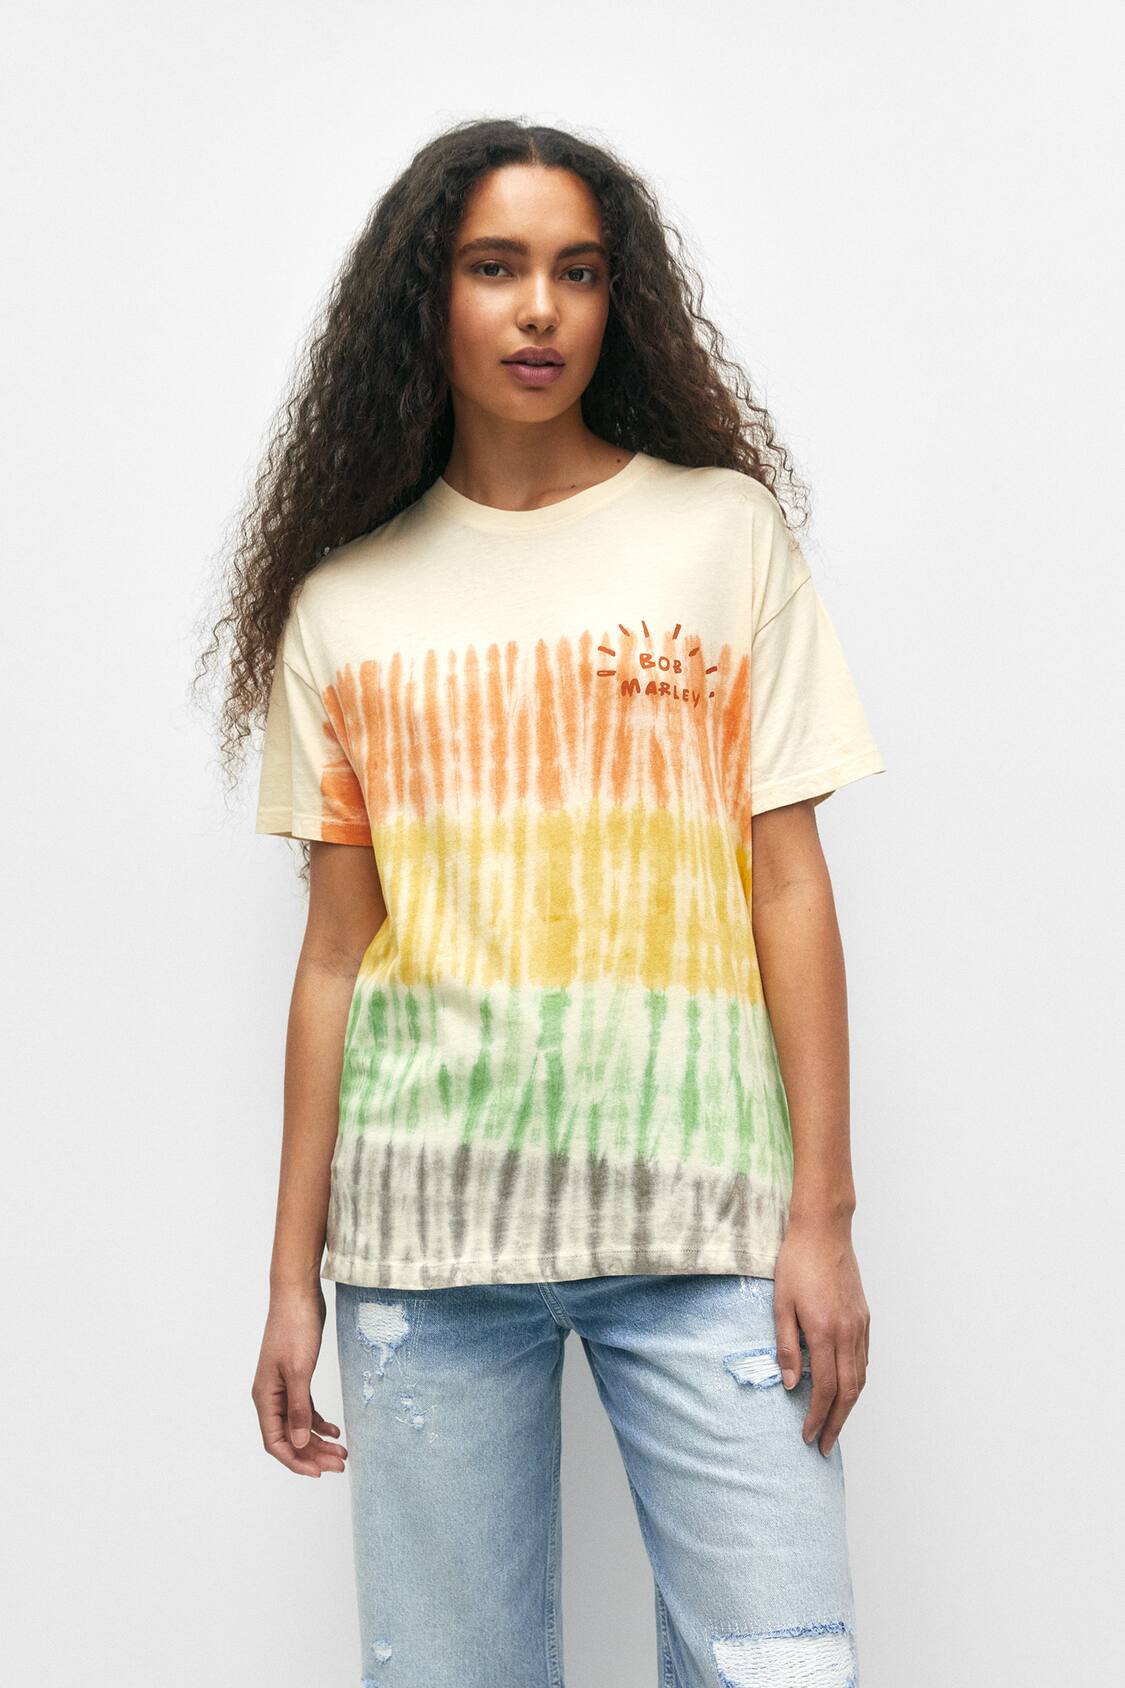 Angreb Bevise Hysterisk Bob Marley tie-dye T-shirt - pull&bear